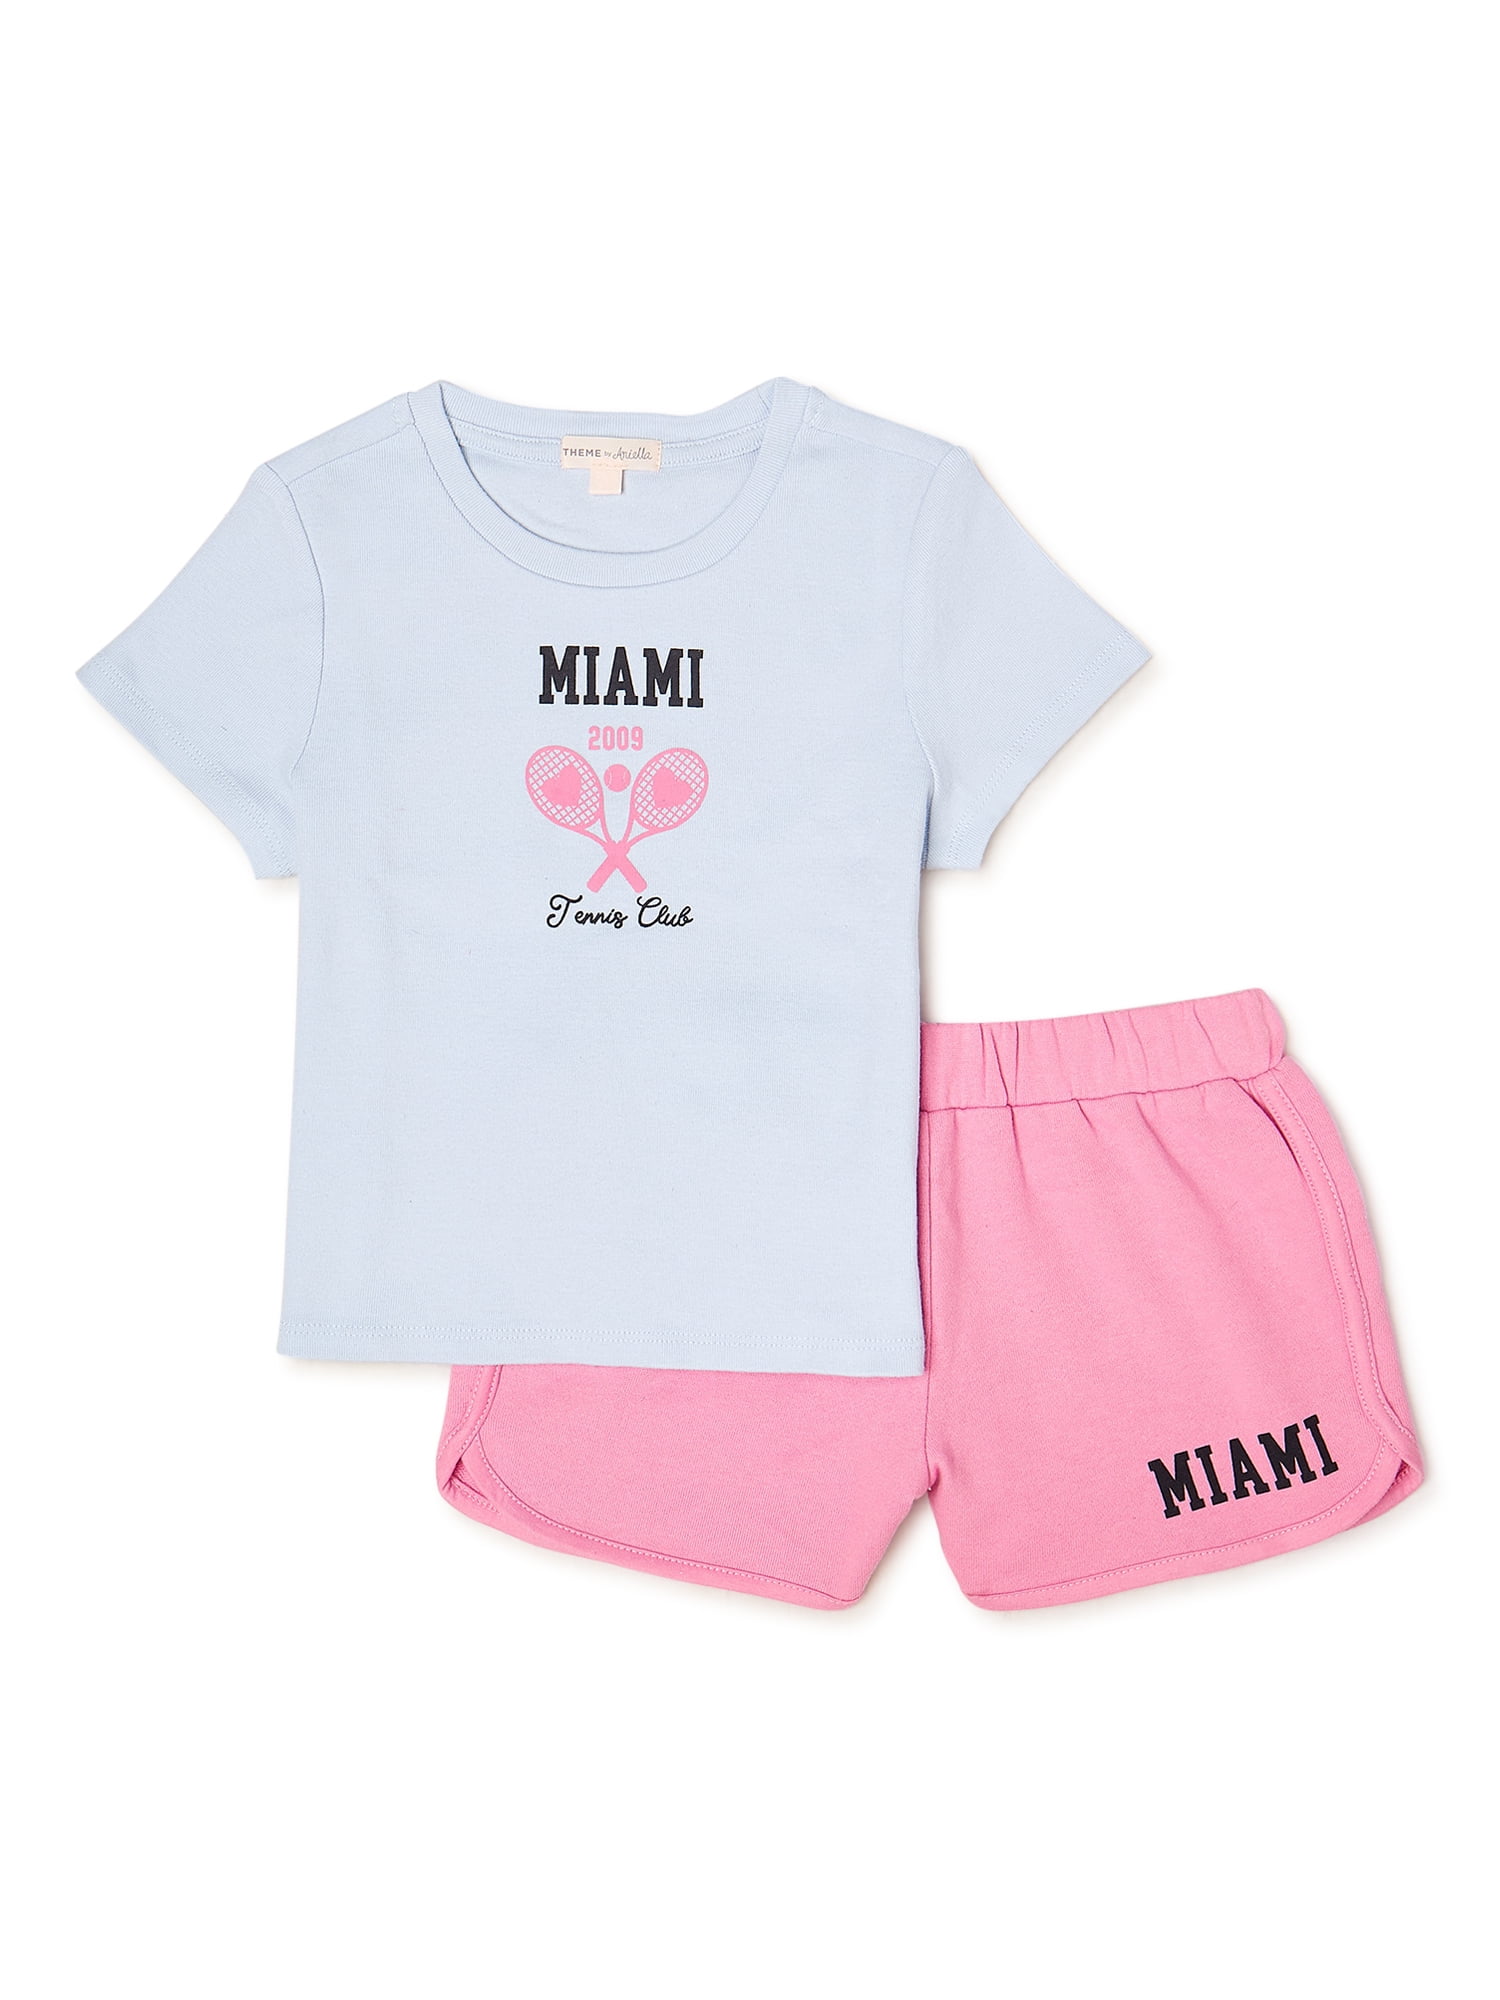 A2Z 4 Kids® Kids Boys Girls T Shirt Short Set Designers 100% Cotton NY New York Print T-Shirt Top & Shorts Set Age 5 6 7 8 9 10 11 12 13 Years 